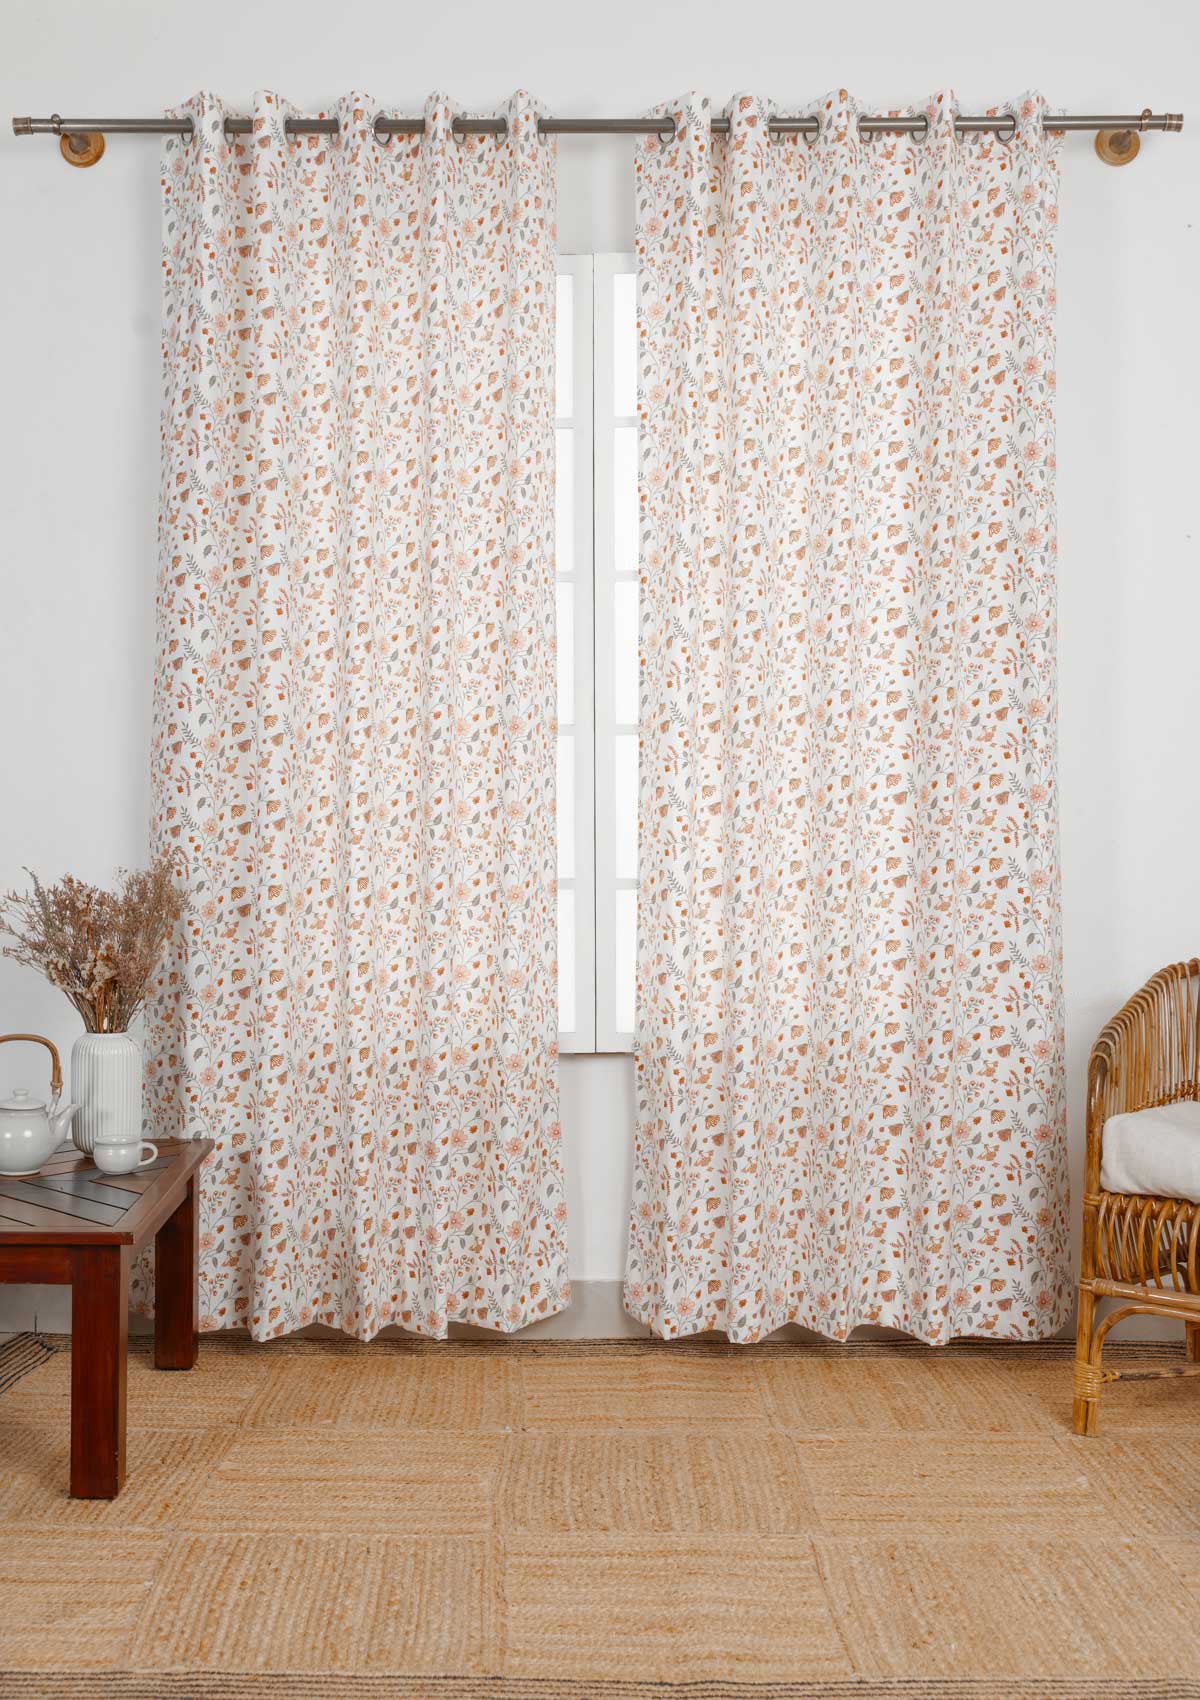 Forest bloom 100% cotton floral curtain for living room - Room darkening - Orange - Single